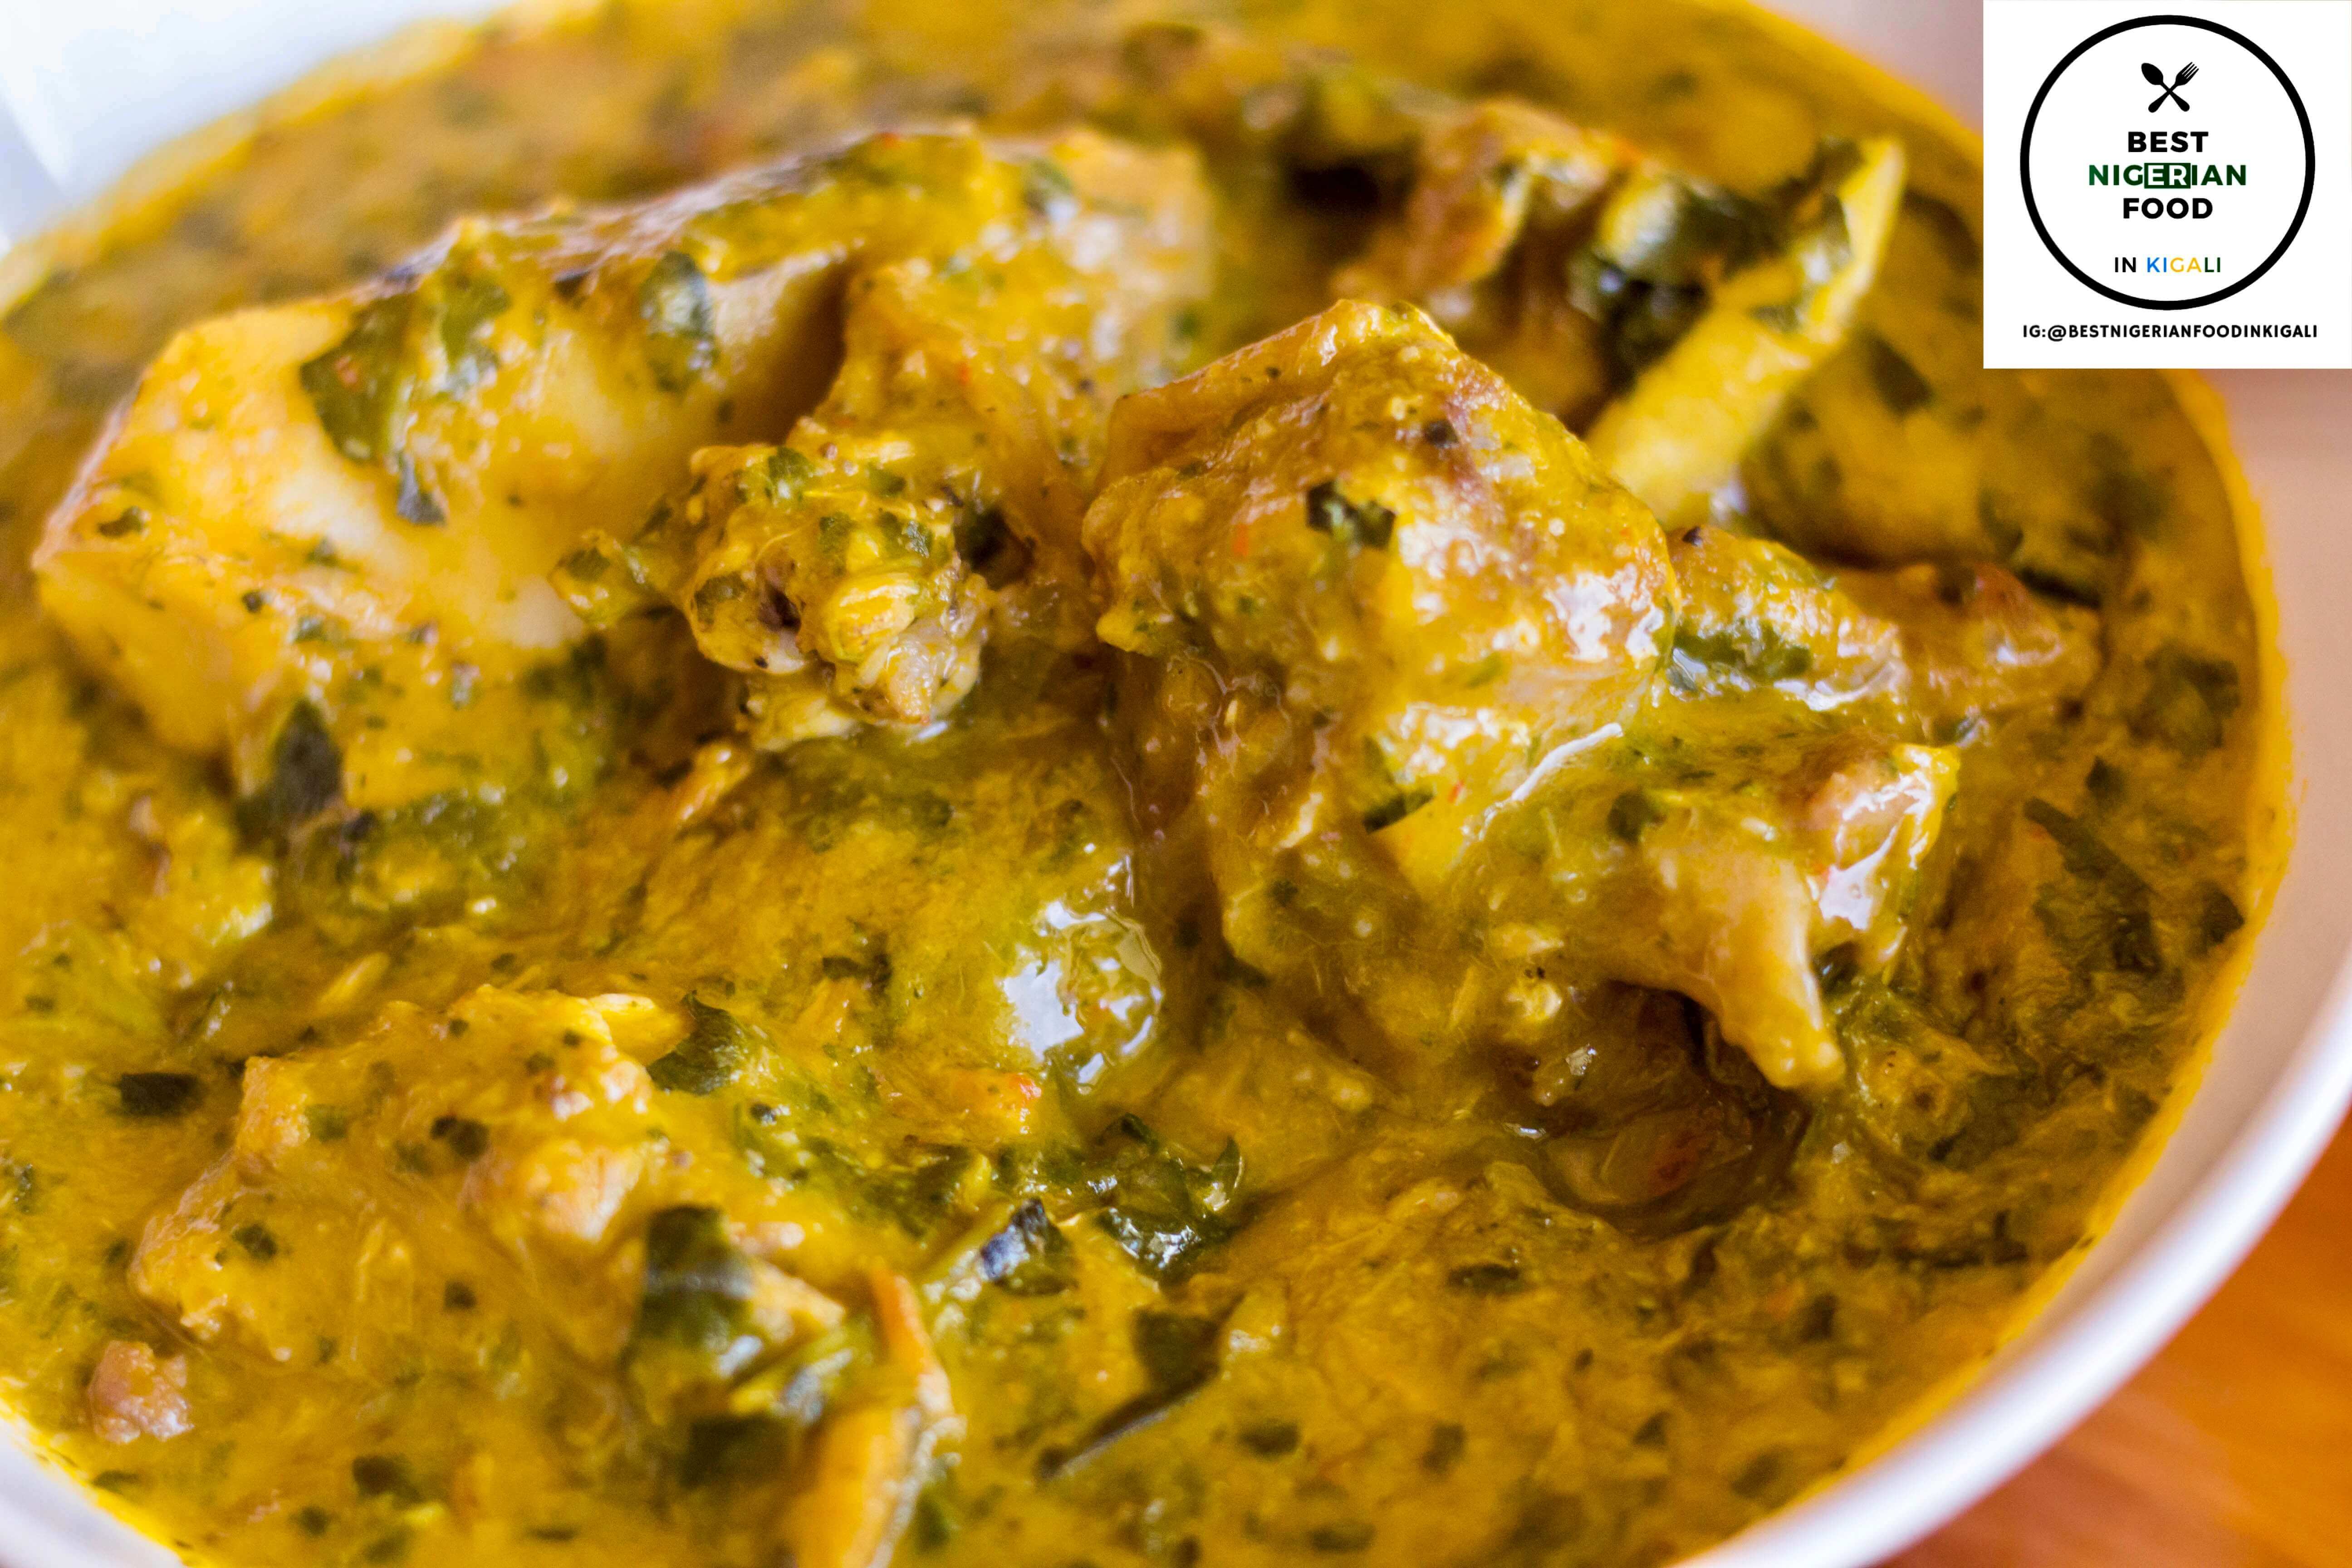 Soups in Litres (4L) Bitterleaf Soup - The Best Nigerian Food in Kigali